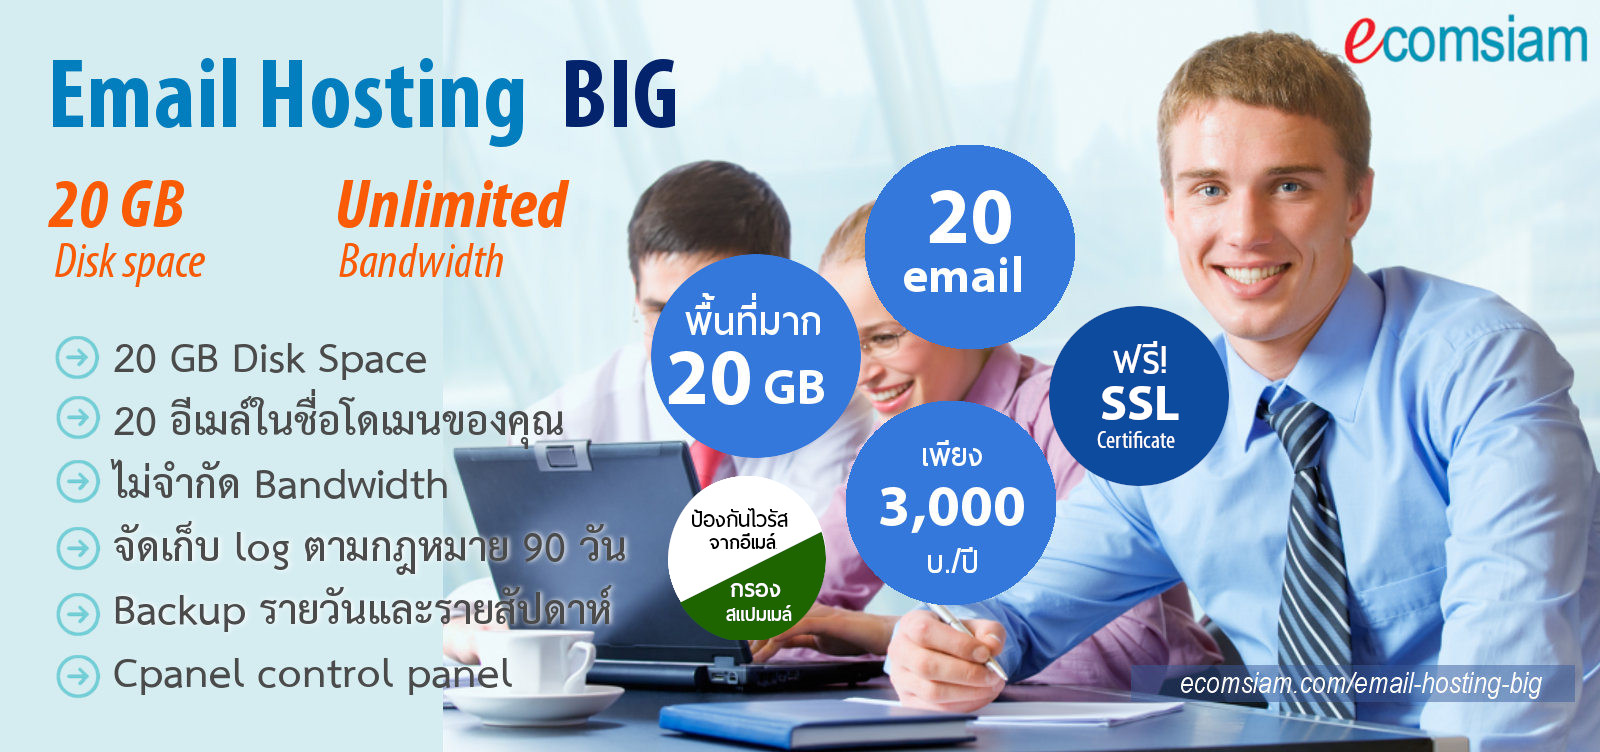 email hosting thai คุณภาพสูง สำหรับองค์กร พื้นที่ขนาดใหญ่ ราคาไม่แพง เว็บโฮสติ้งไทย free SSL